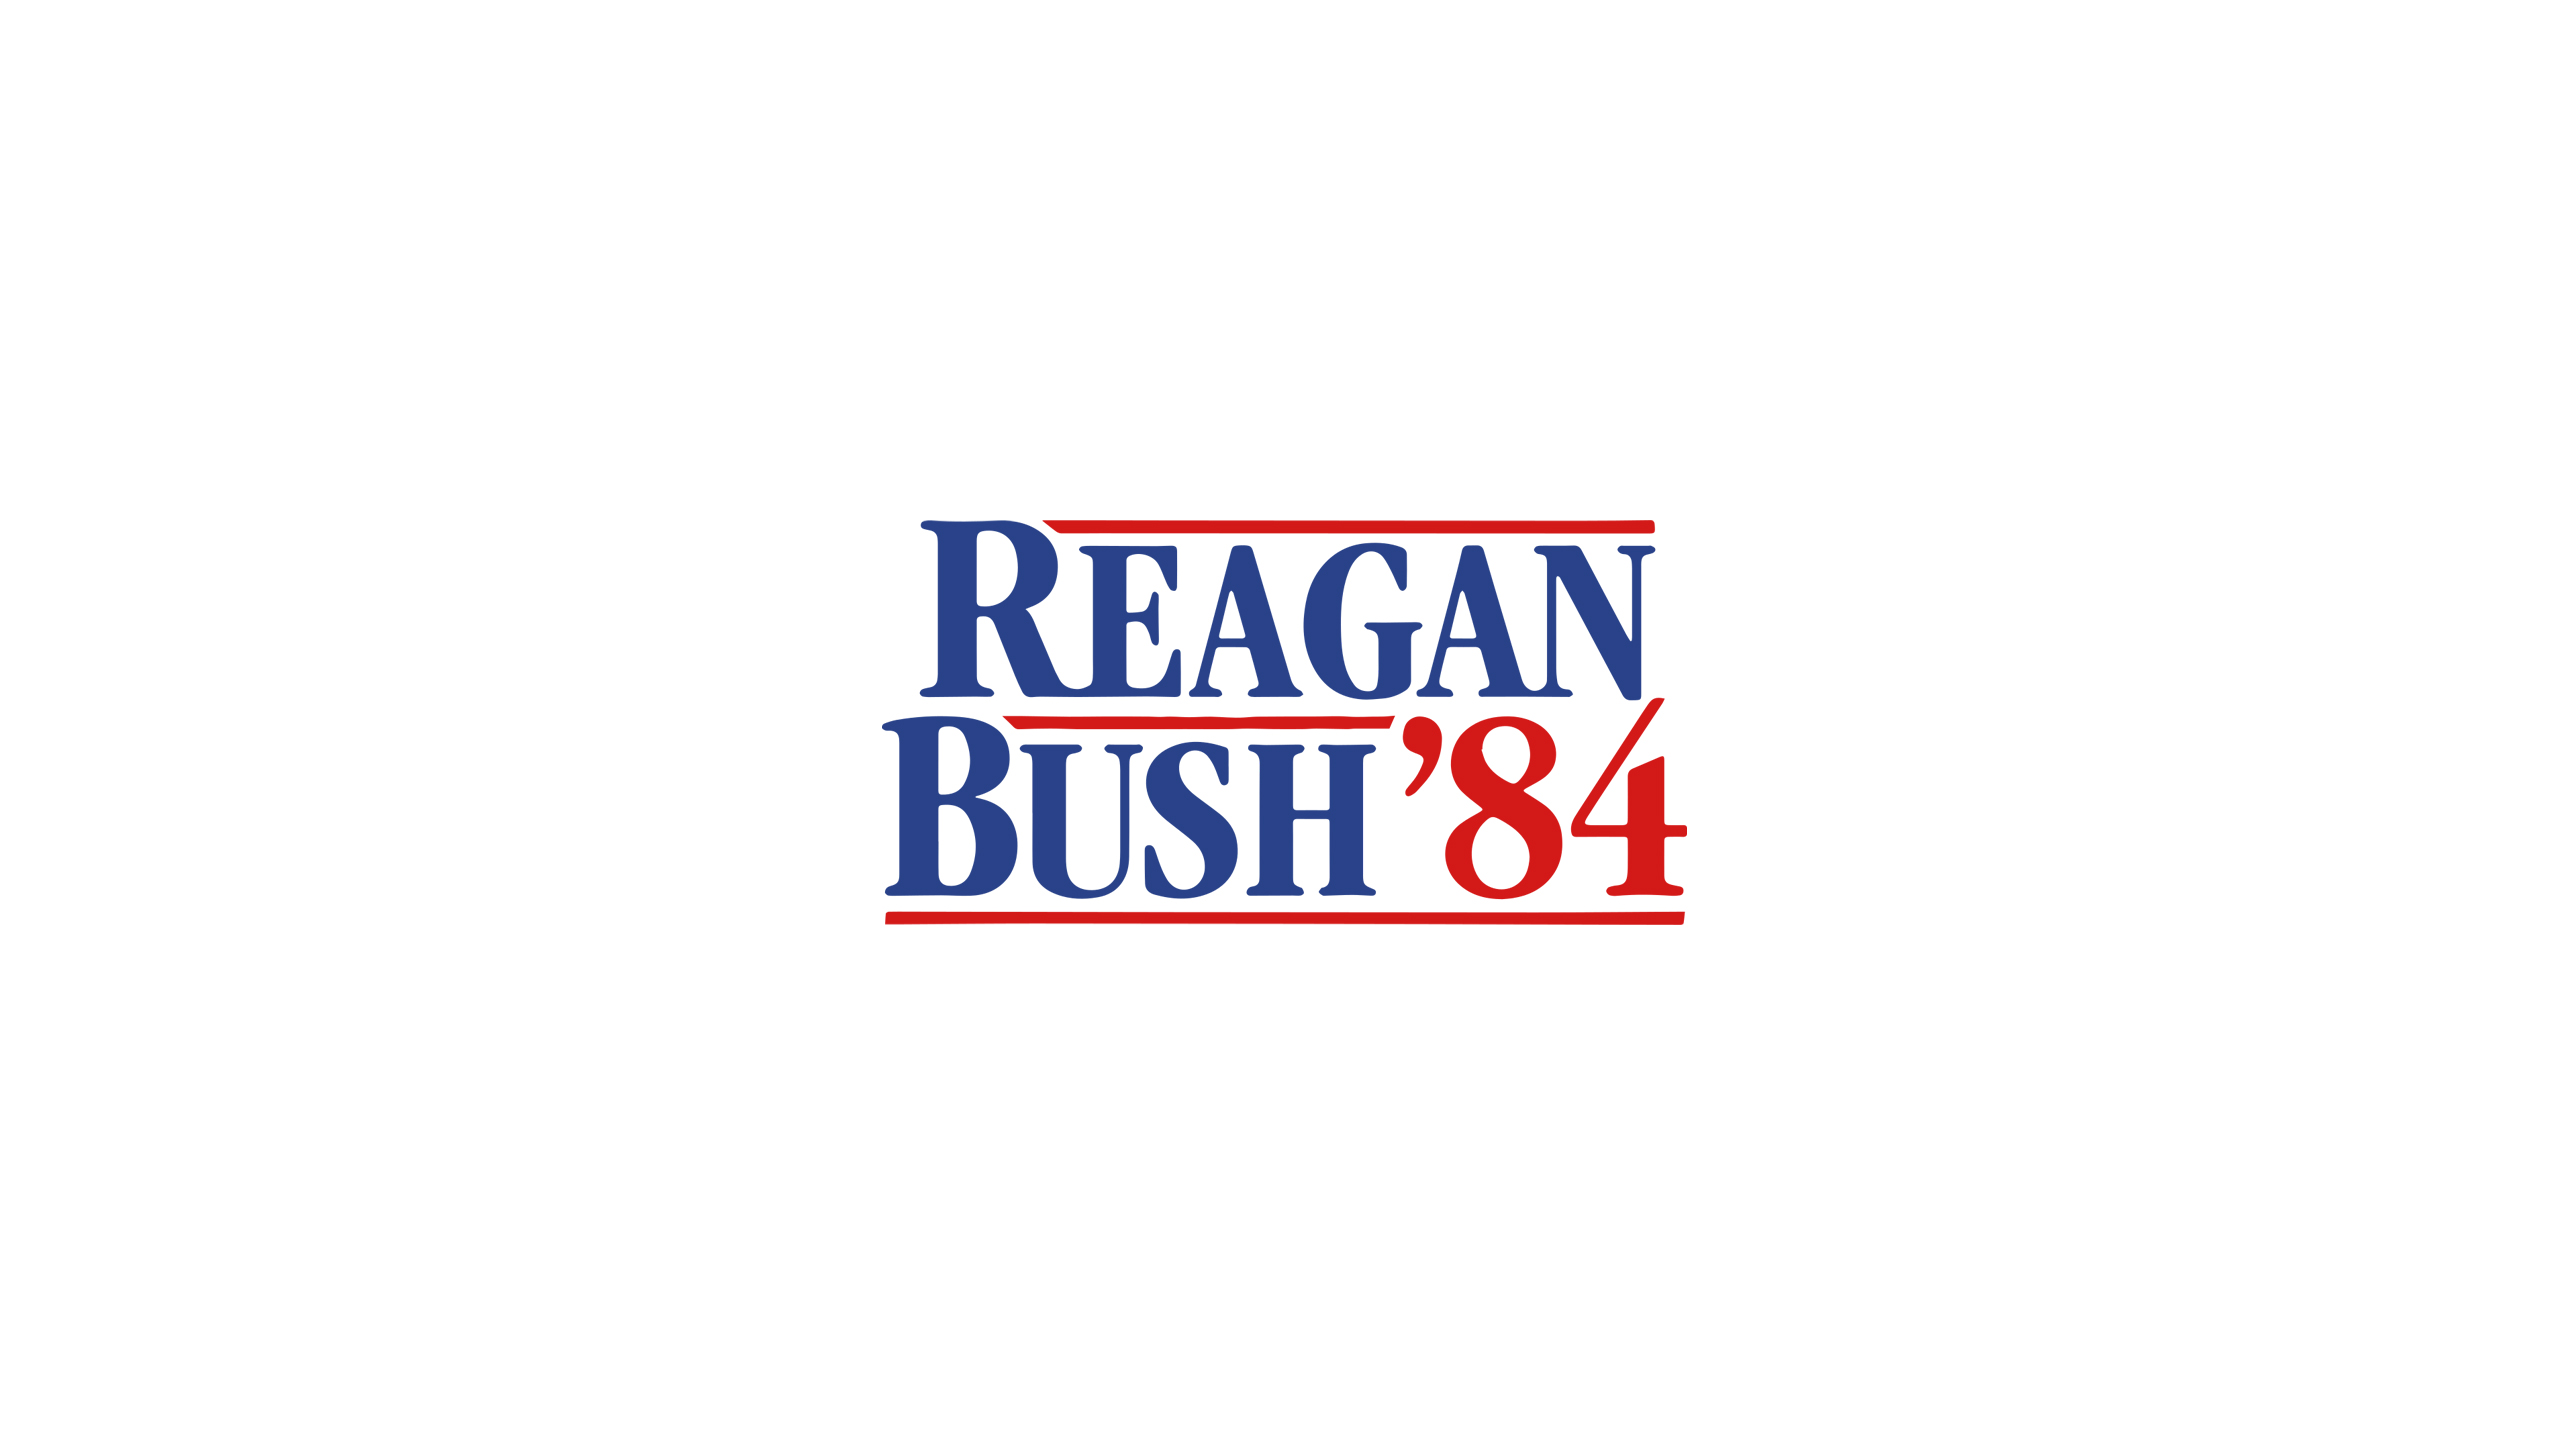 General 2569x1445 Ronald Reagan George H. W. Bush 1984 politics political figure logo 1984 (Year) simple background text digital art